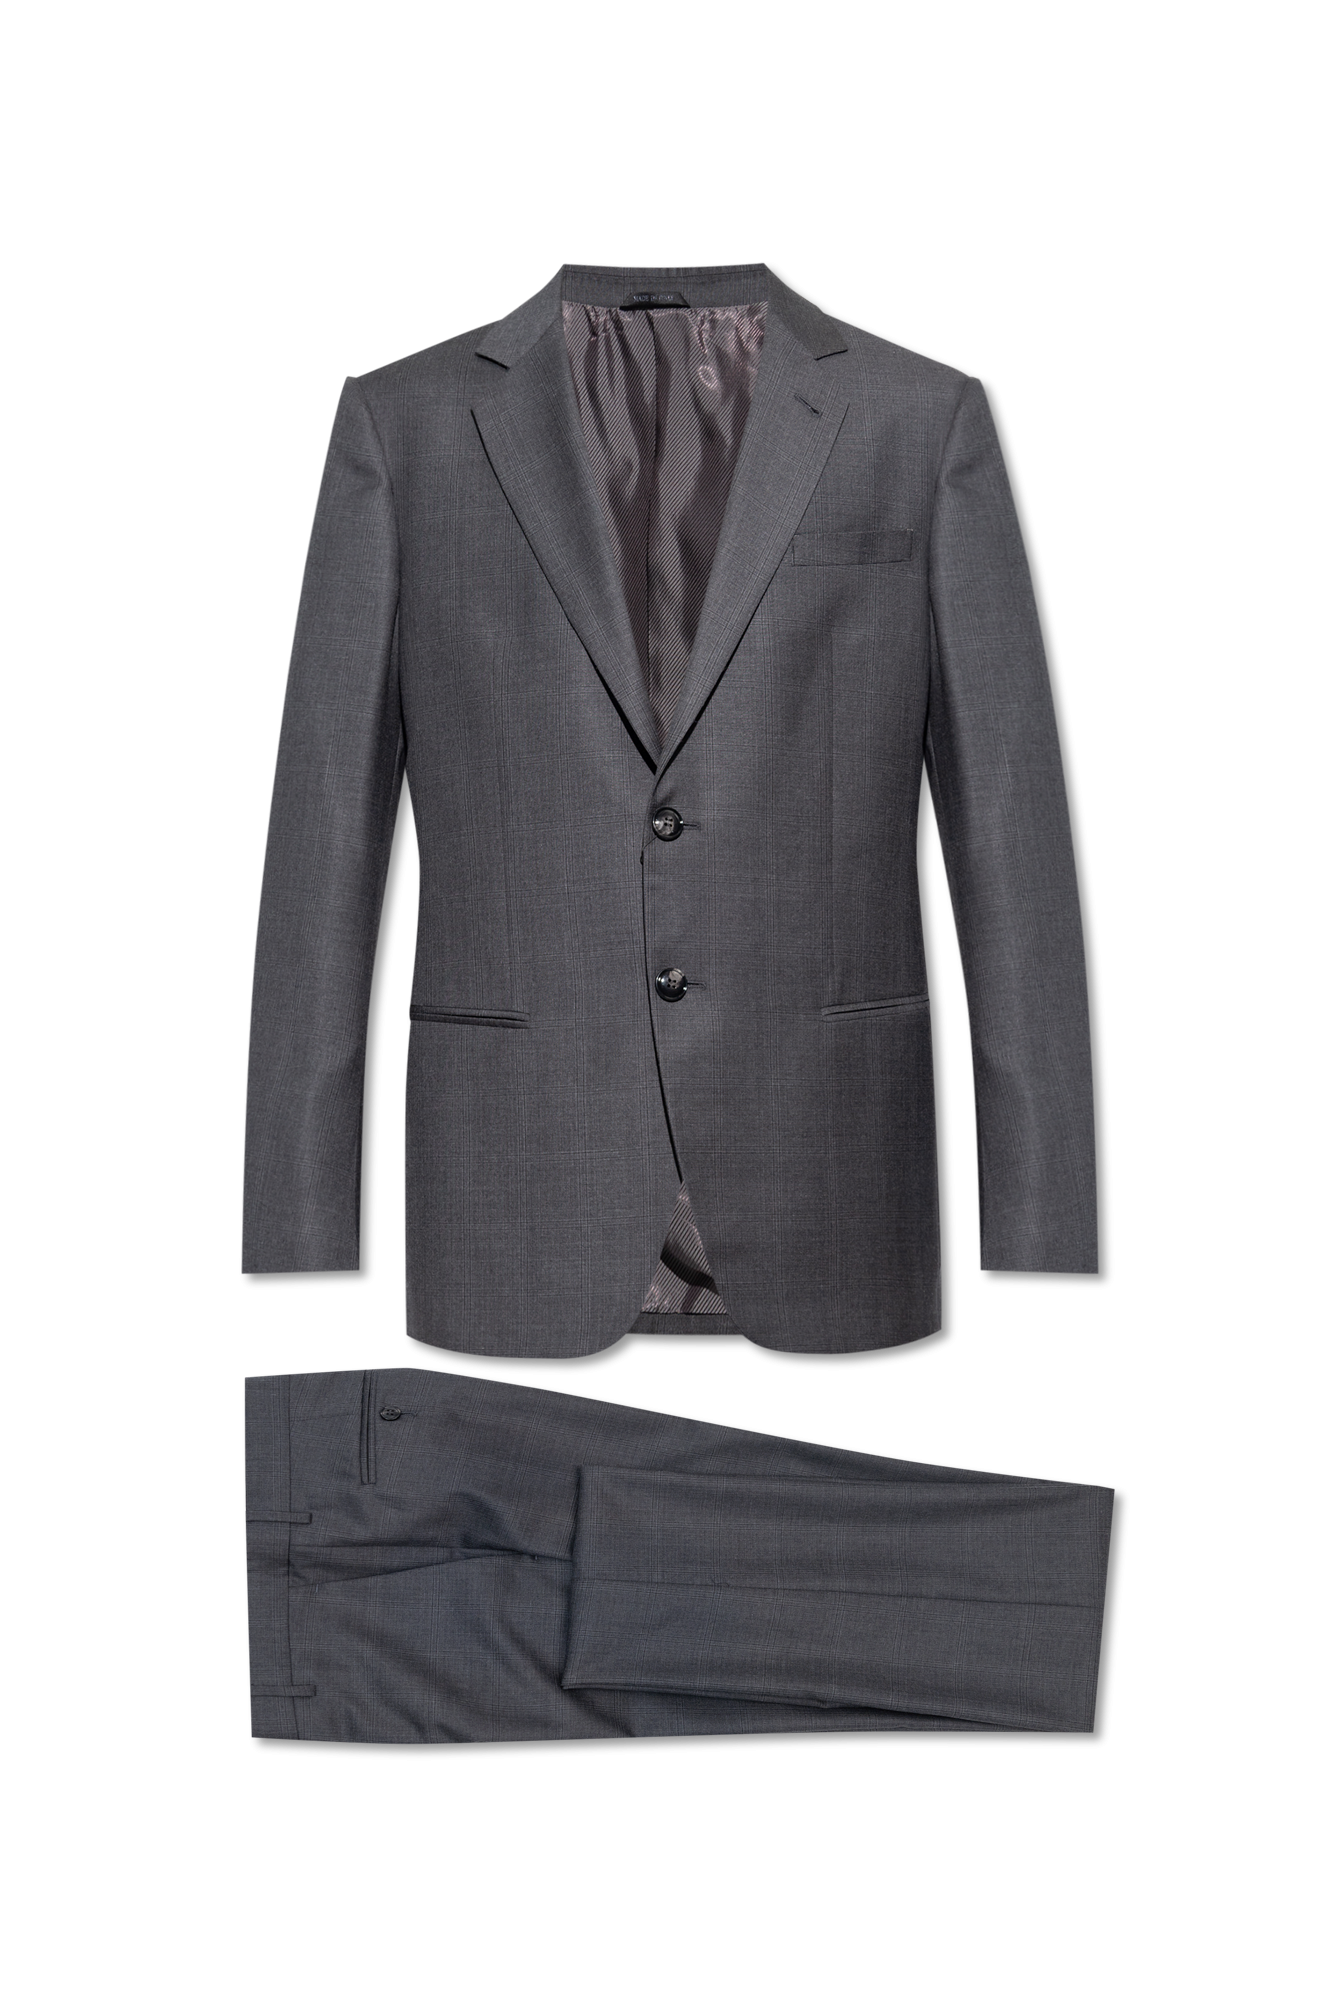 Giorgio Armani med suit